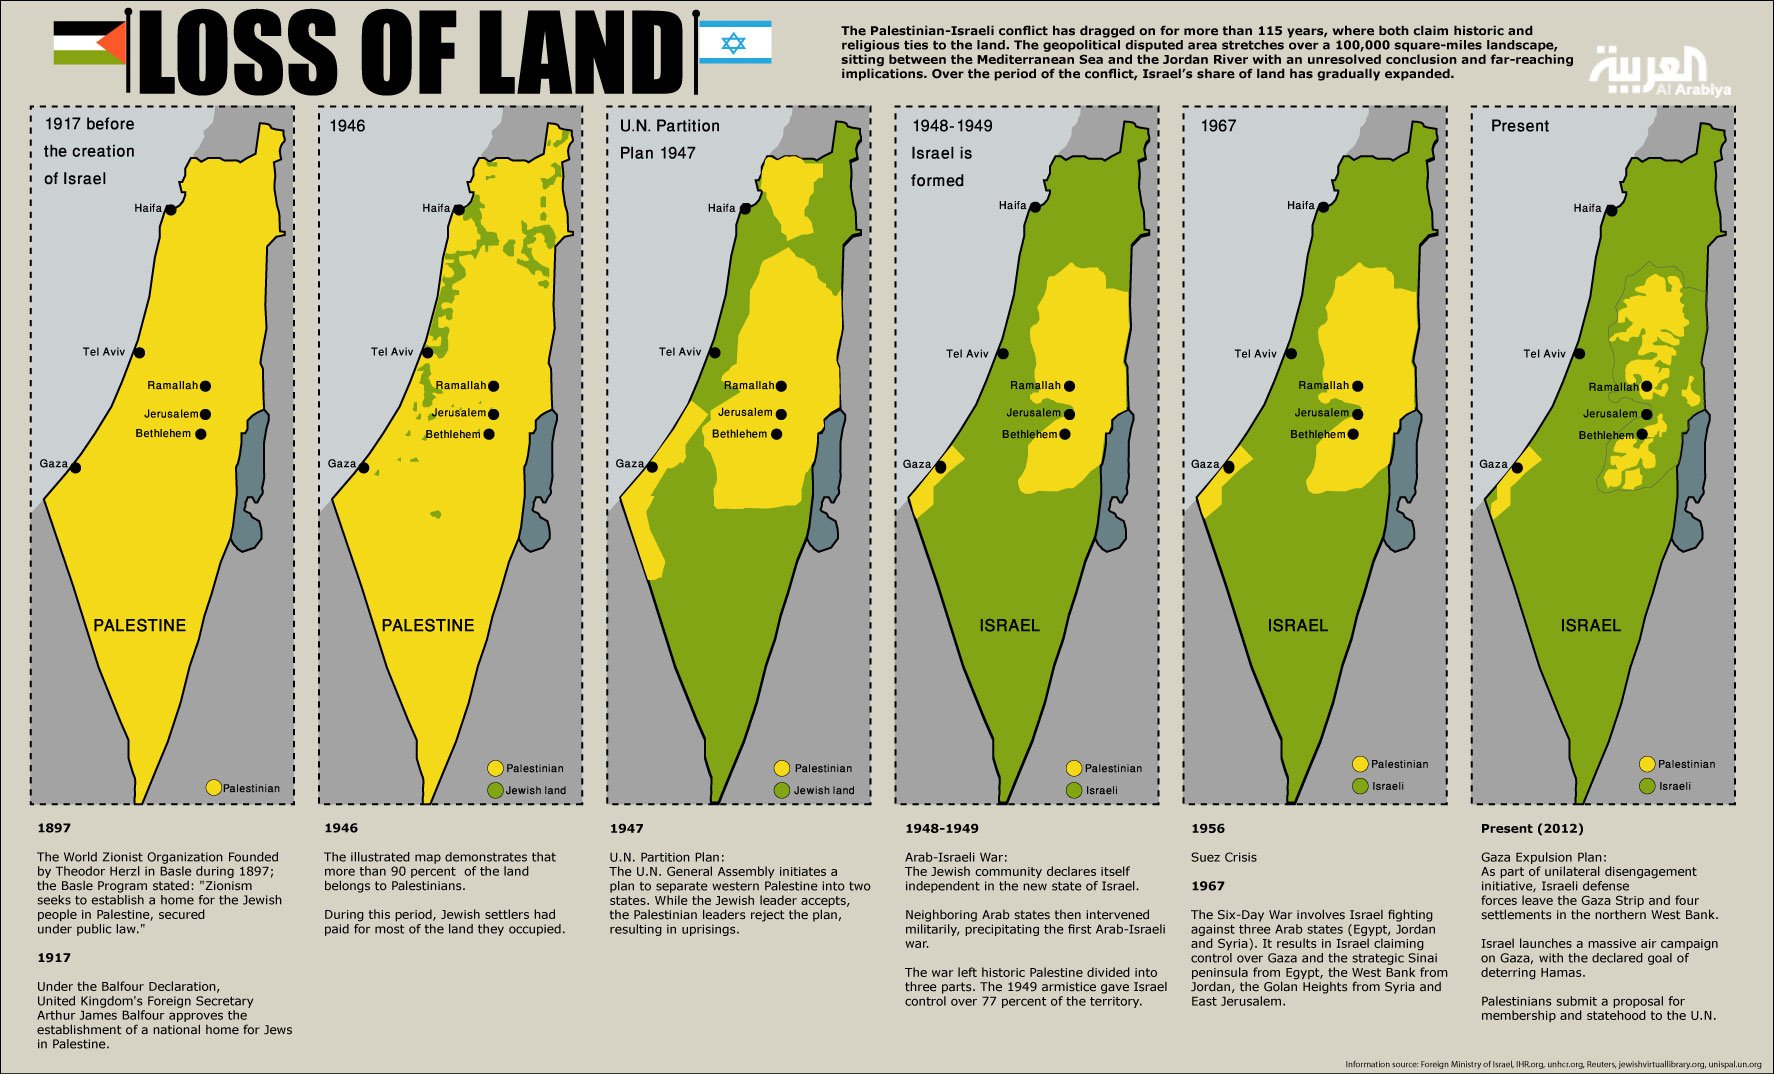 Maps: Loss of Land - Palestine